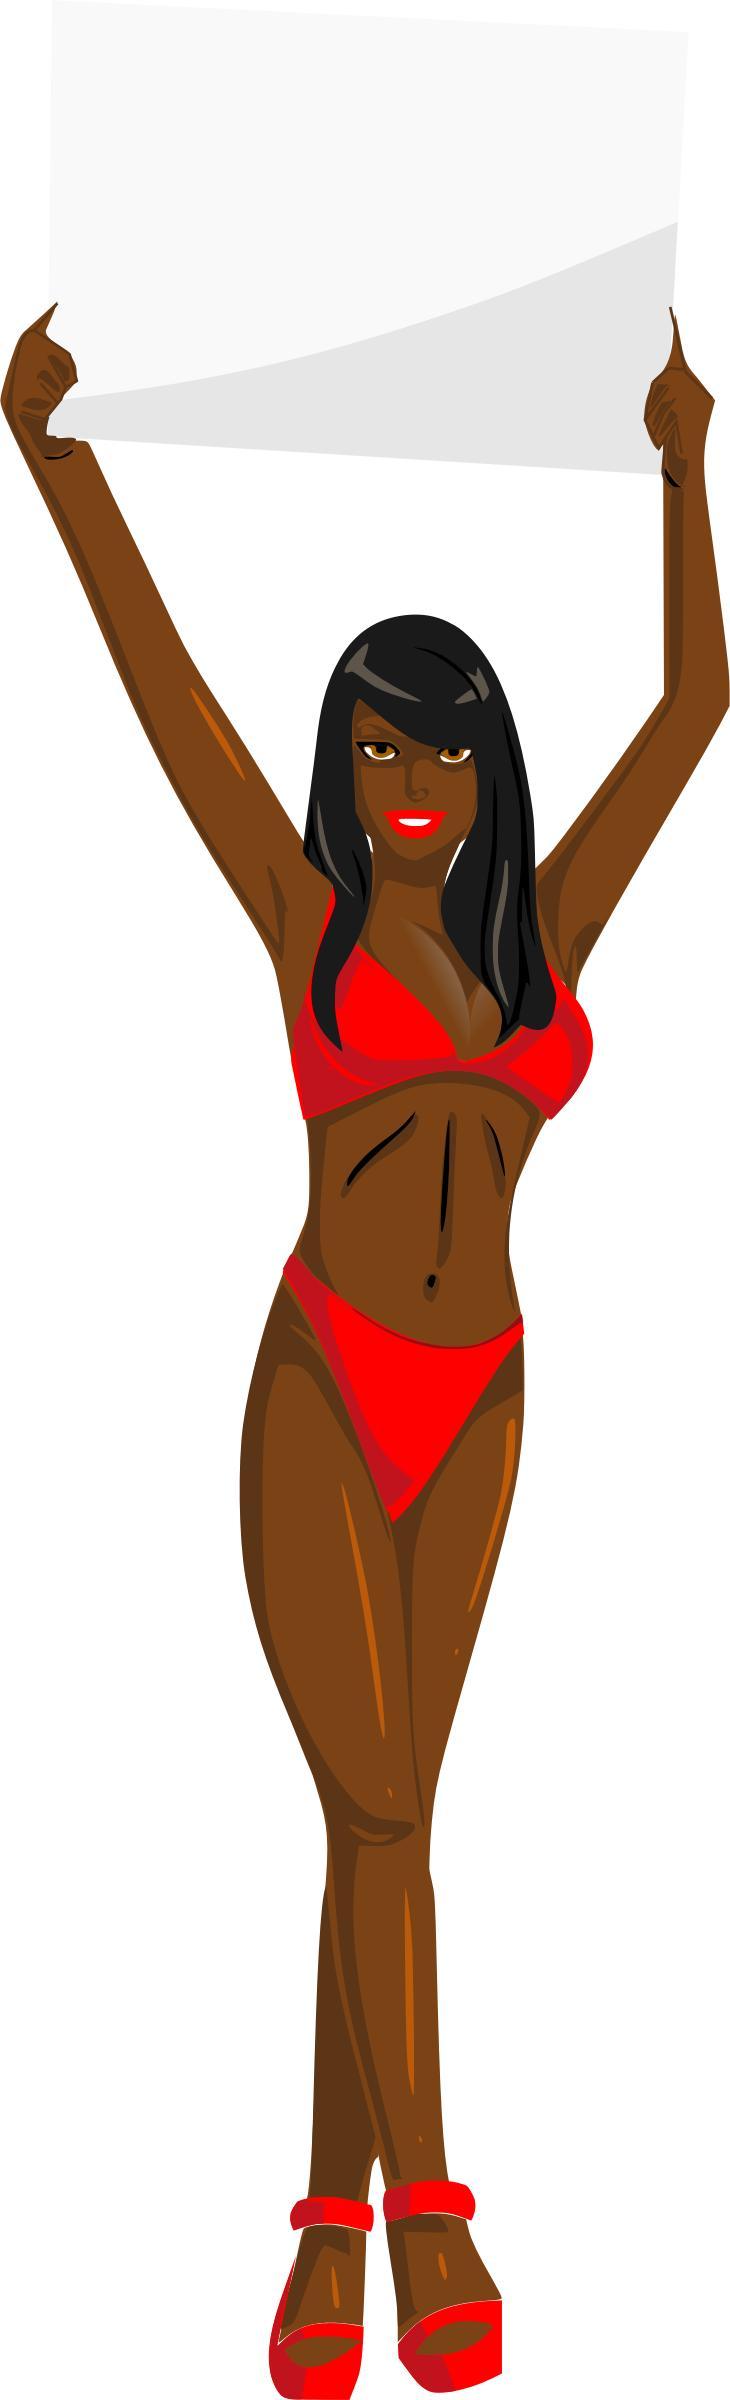 Girl with sign (red bikini, black hair, dark skin) png transparent